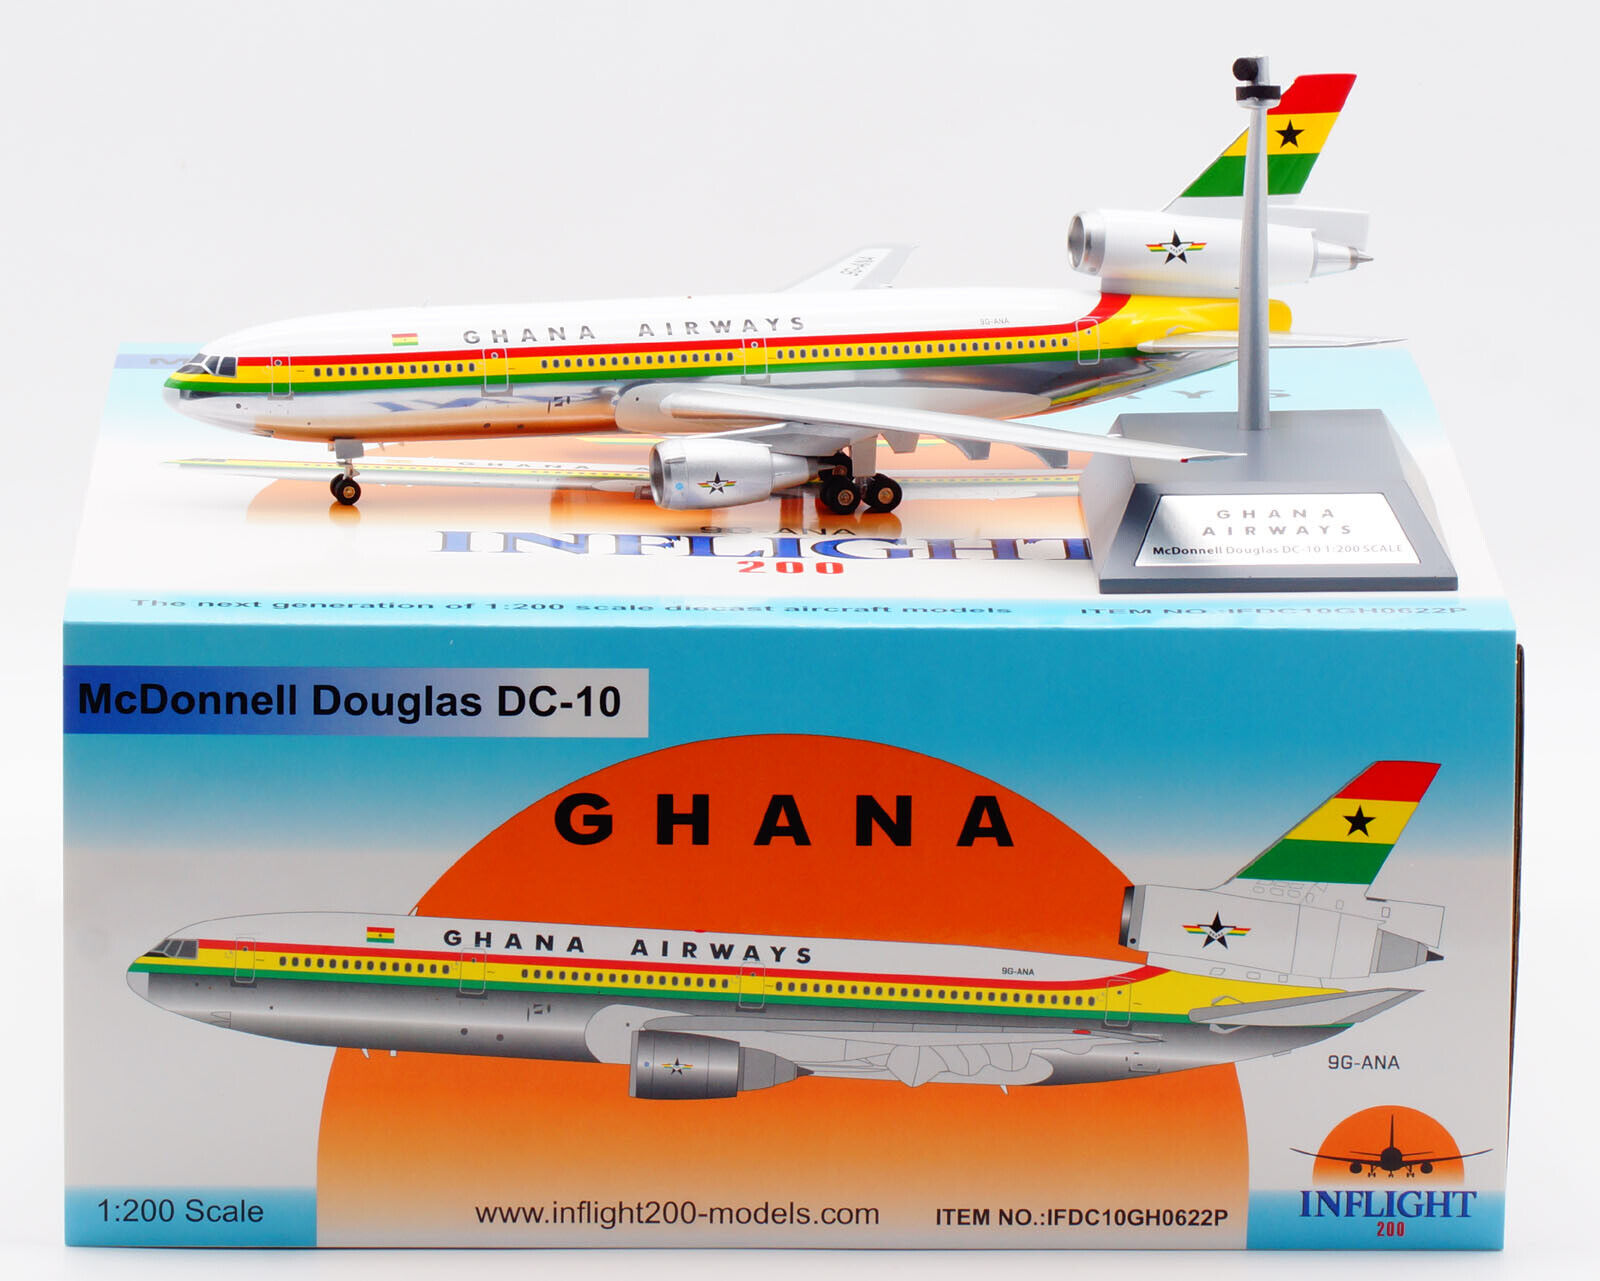 INFLIGHT 1:200 GHANA AIRWAYS McDonnell DC-10-30 Diecast Aircraft Model 9G-ANA